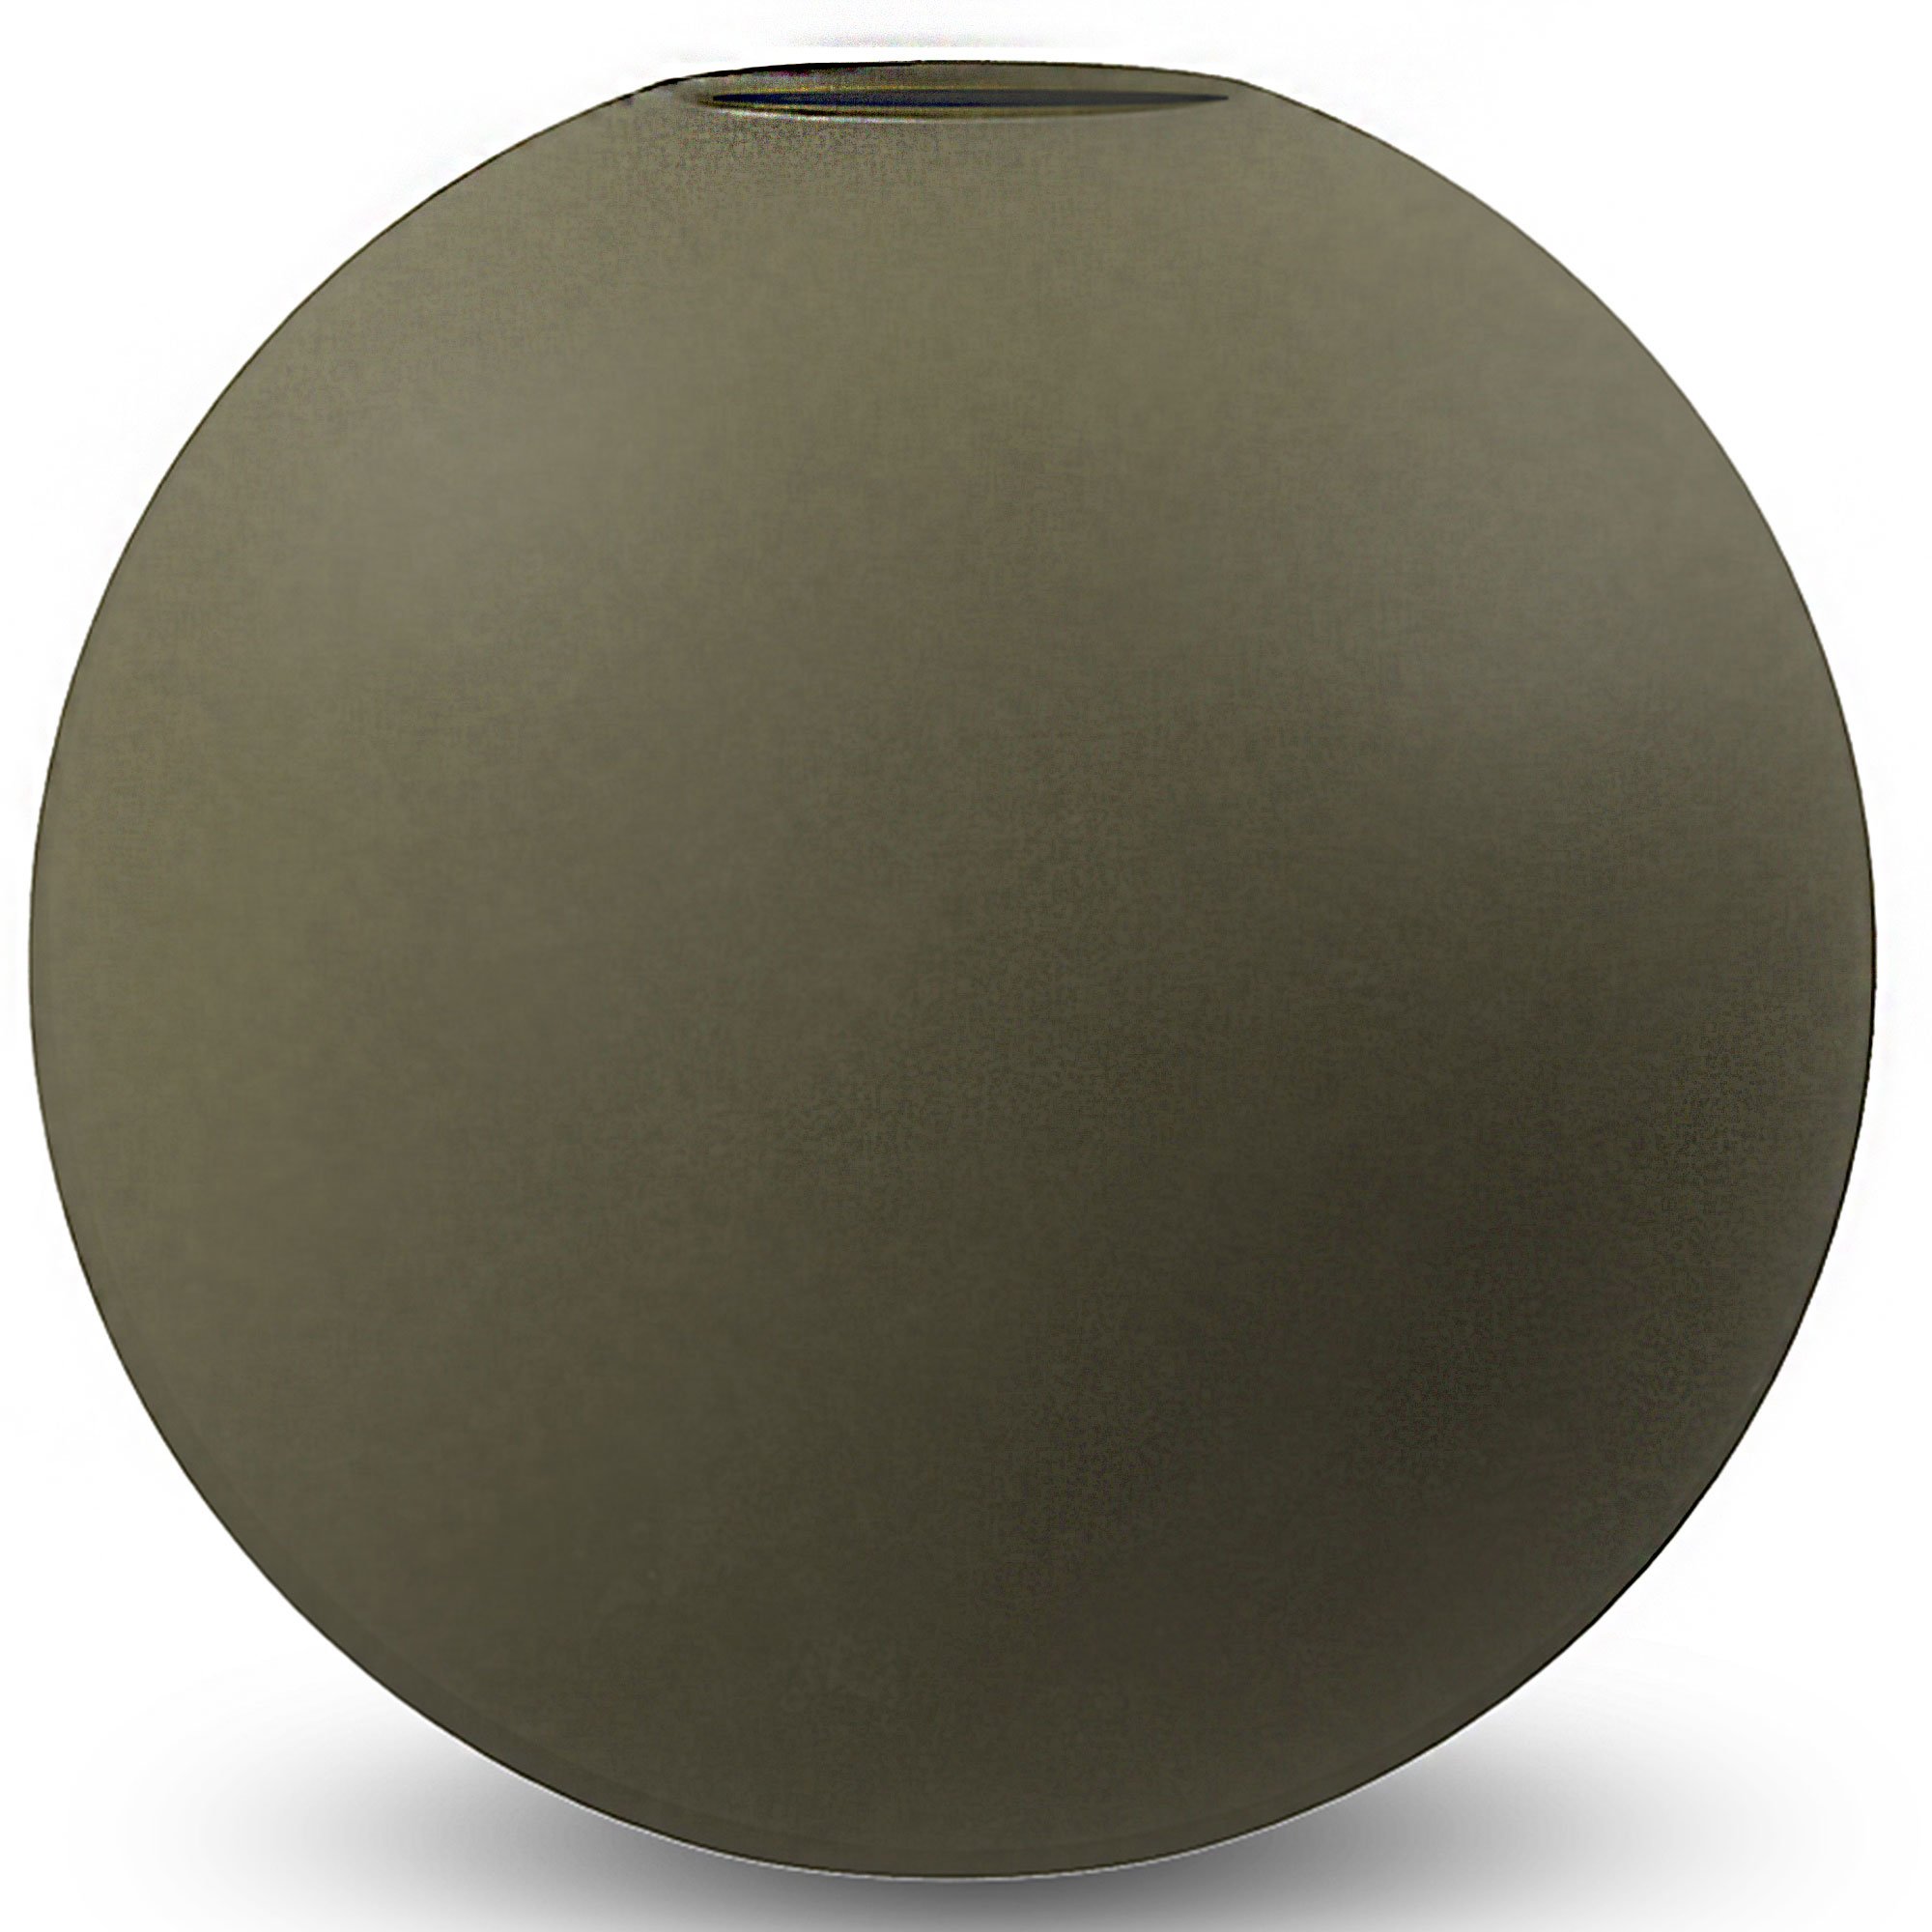 Cooee Design Ball vas 10 cm olive